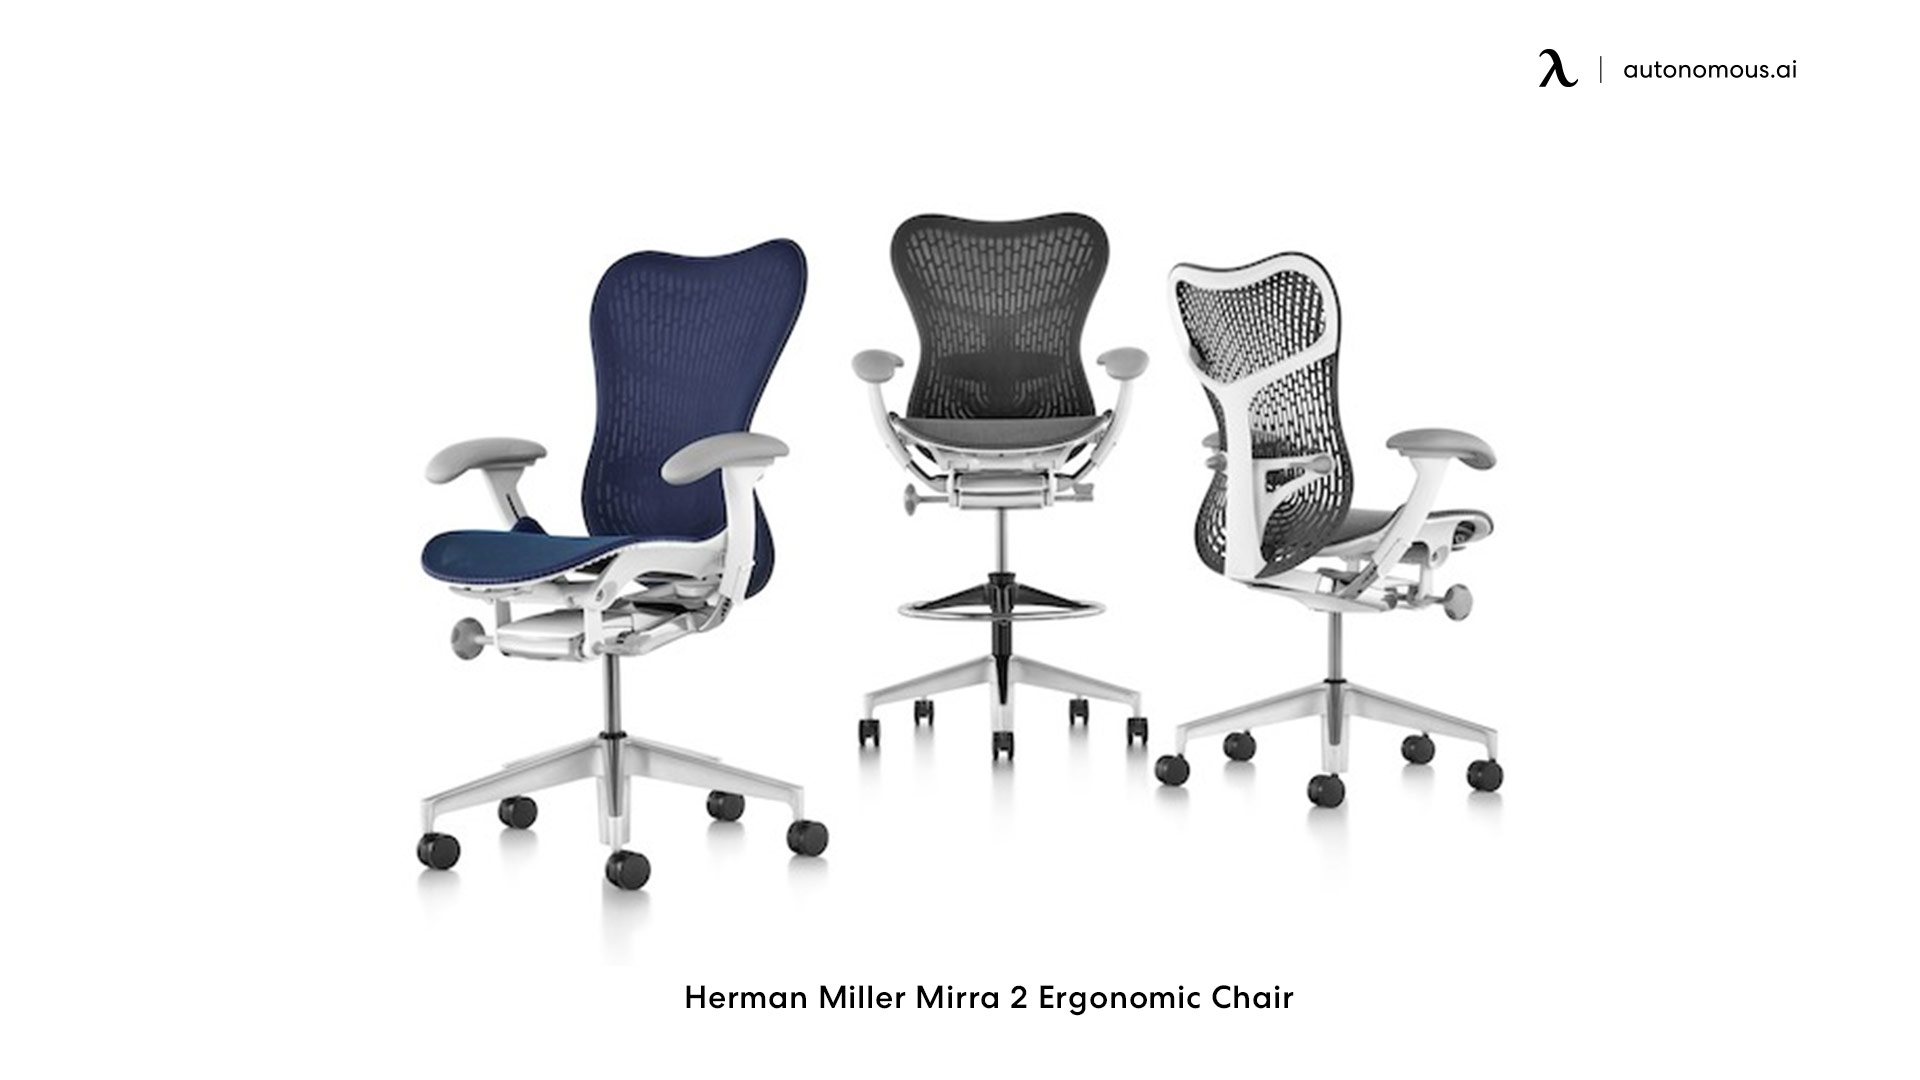 The Herman-Miller Mirra 2 Adjustable Office Seat